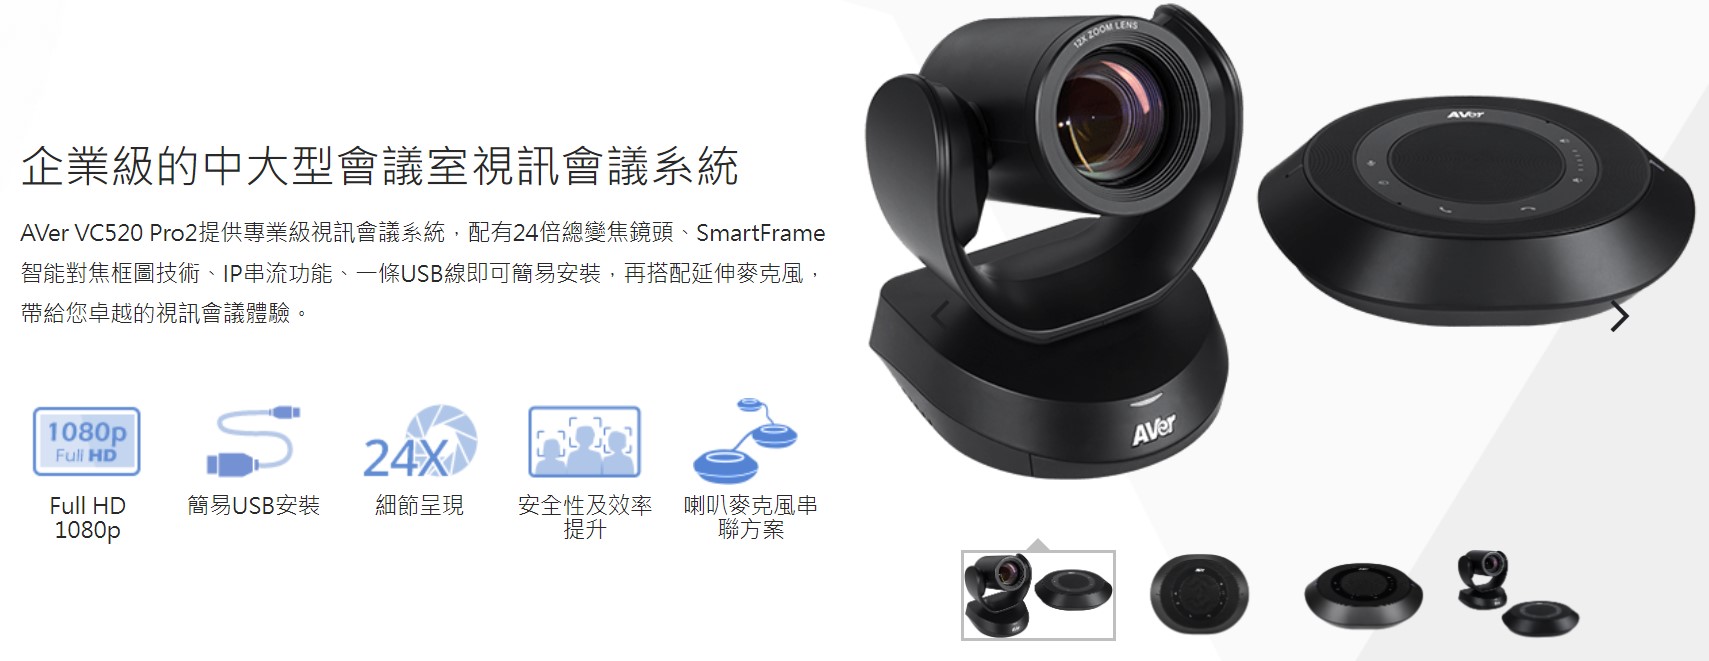 AVer VC520 Pro2 USB 視訊會議攝影機- PChome 商店街